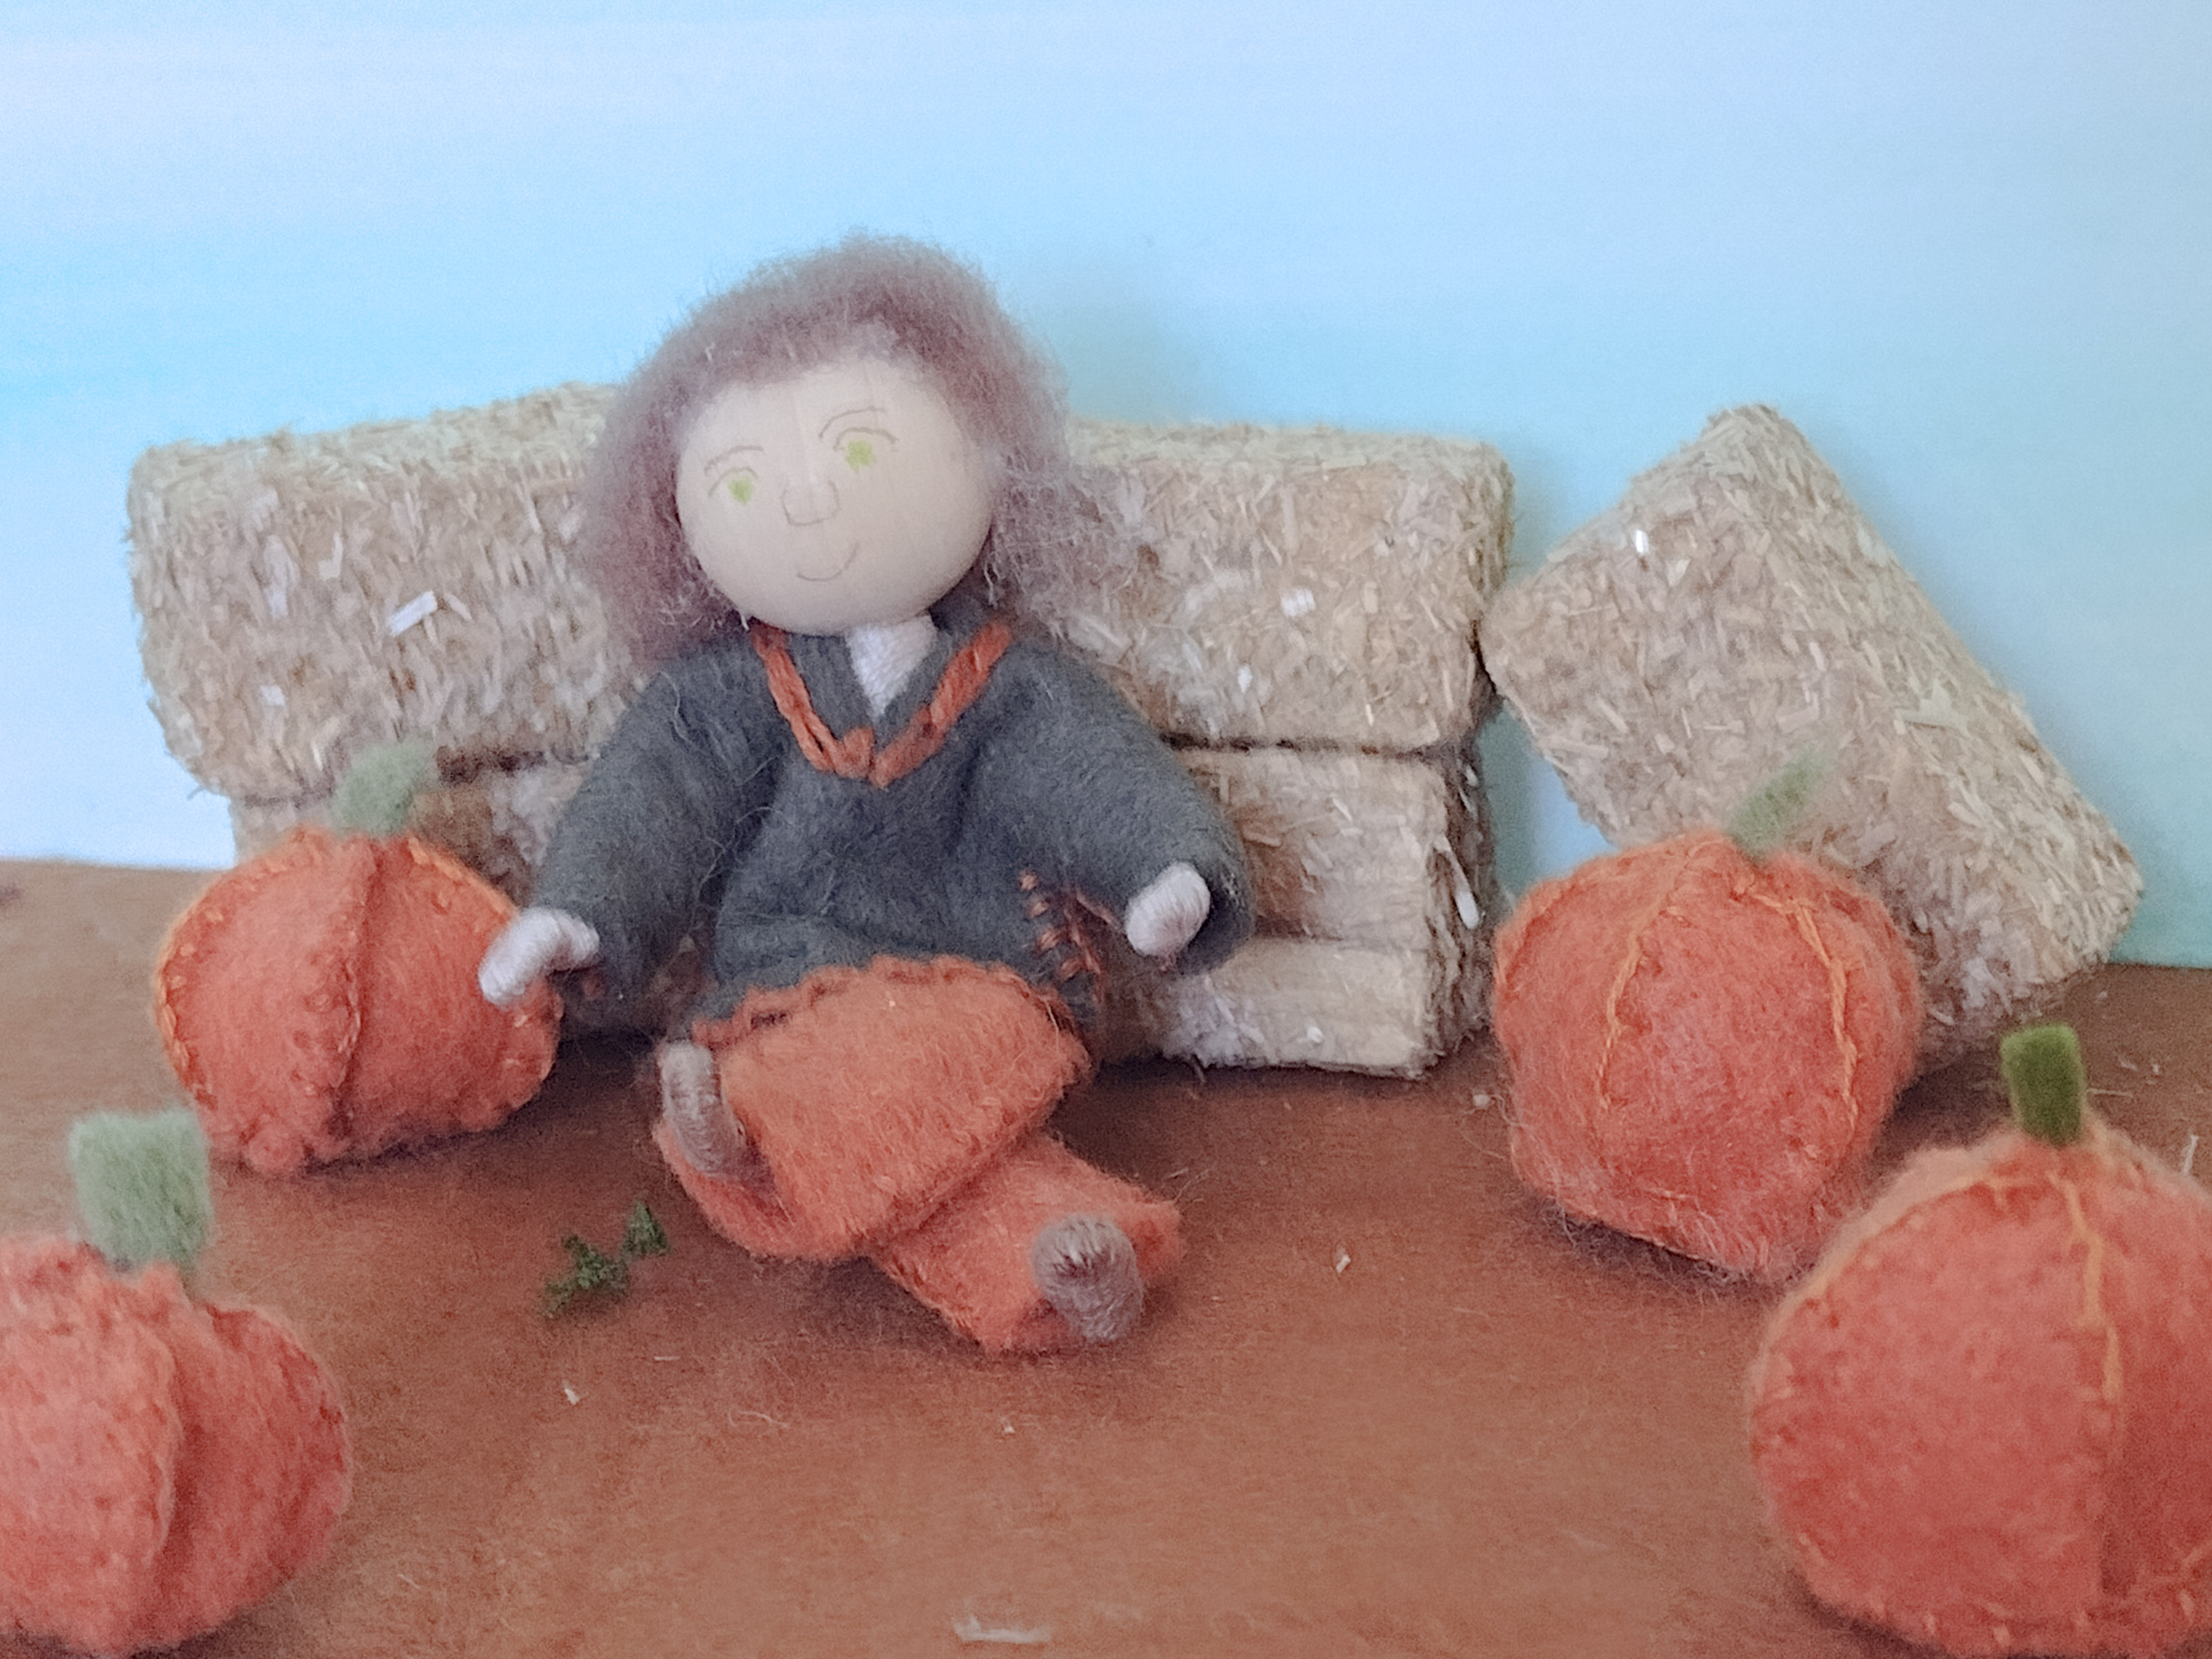 Peter Pumpkin Eater In his pumpkin patch children's story